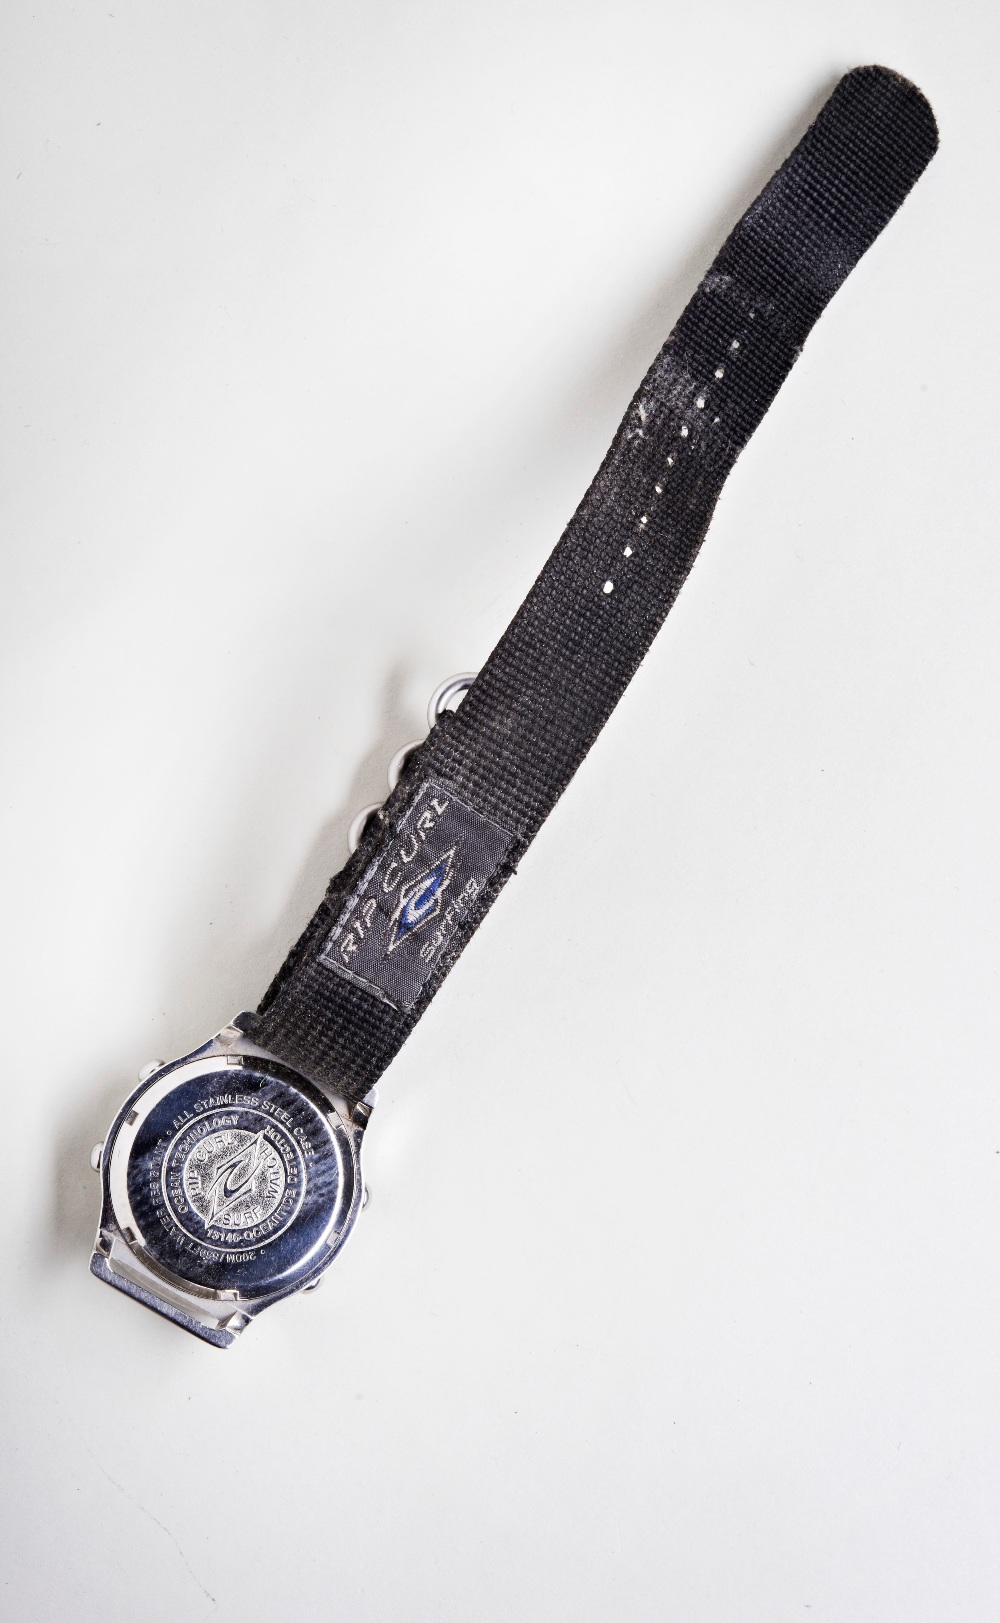 GUESS WATCH COMPANY WATERPRO STEEL, square dial quartz chronograph watch, a NEXT QUARTZ - Image 5 of 7